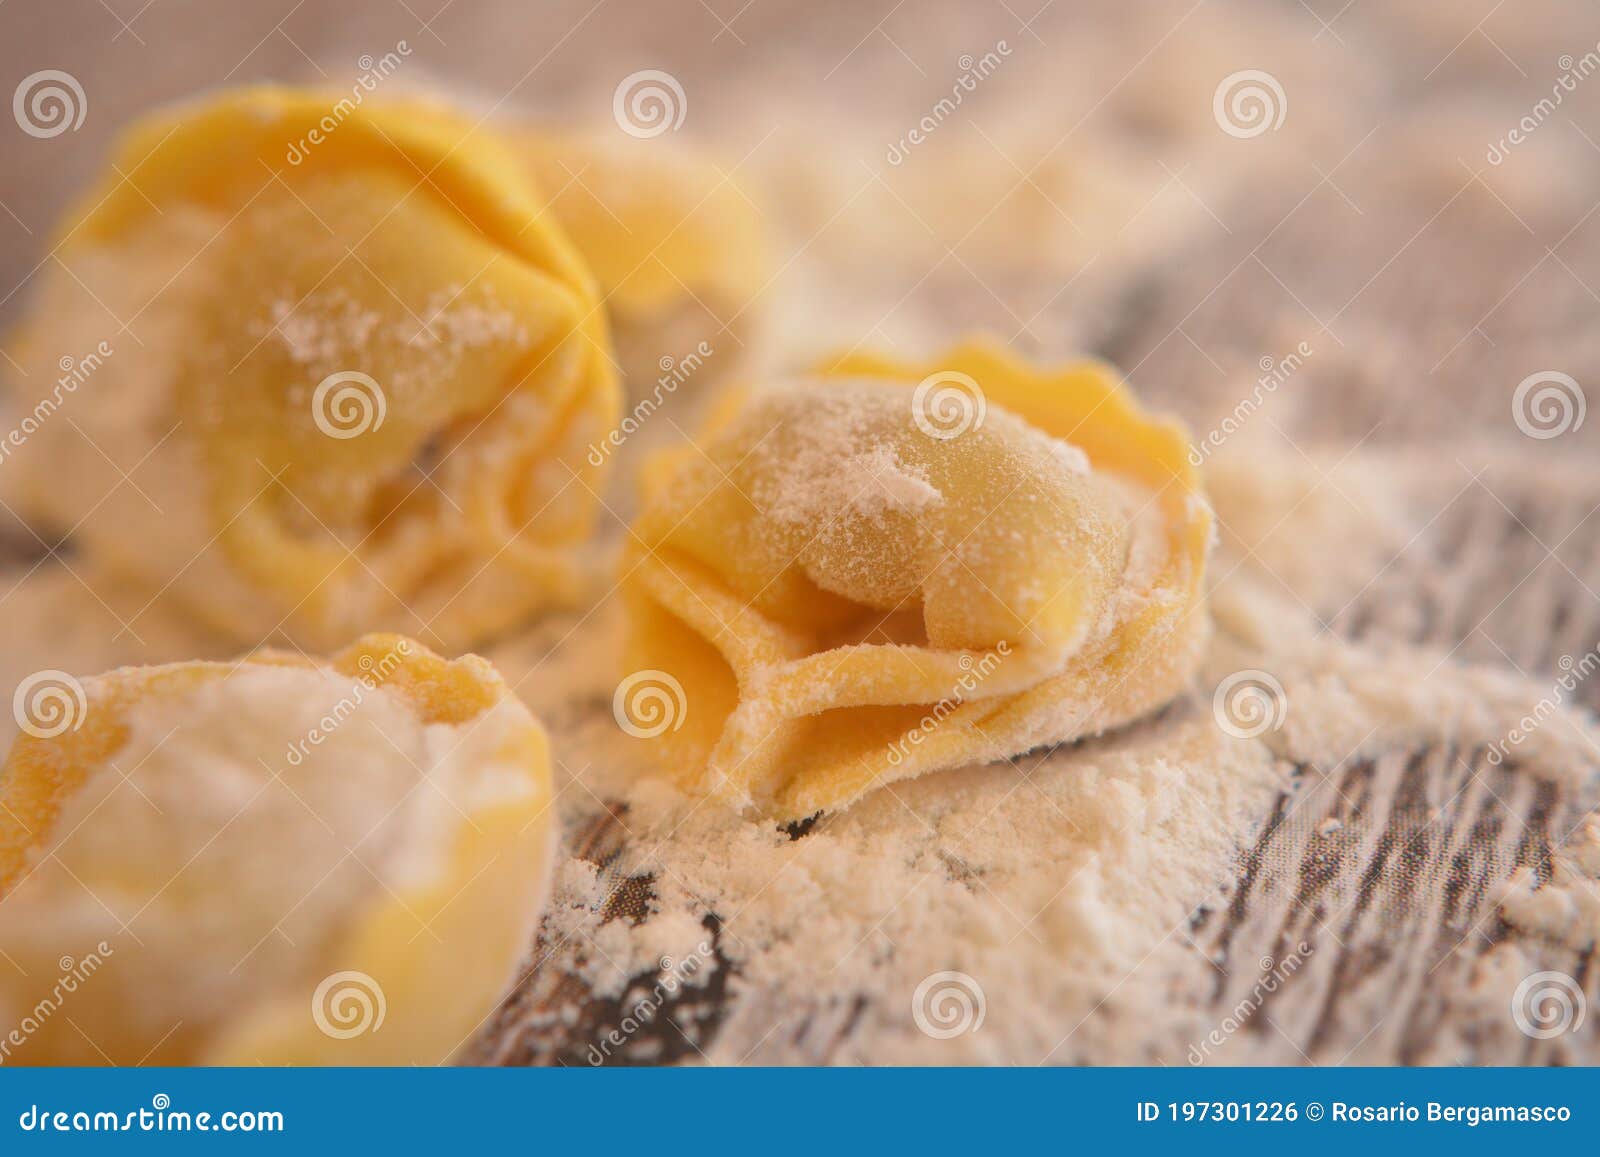 italian tortellini traditional pasta with eggs